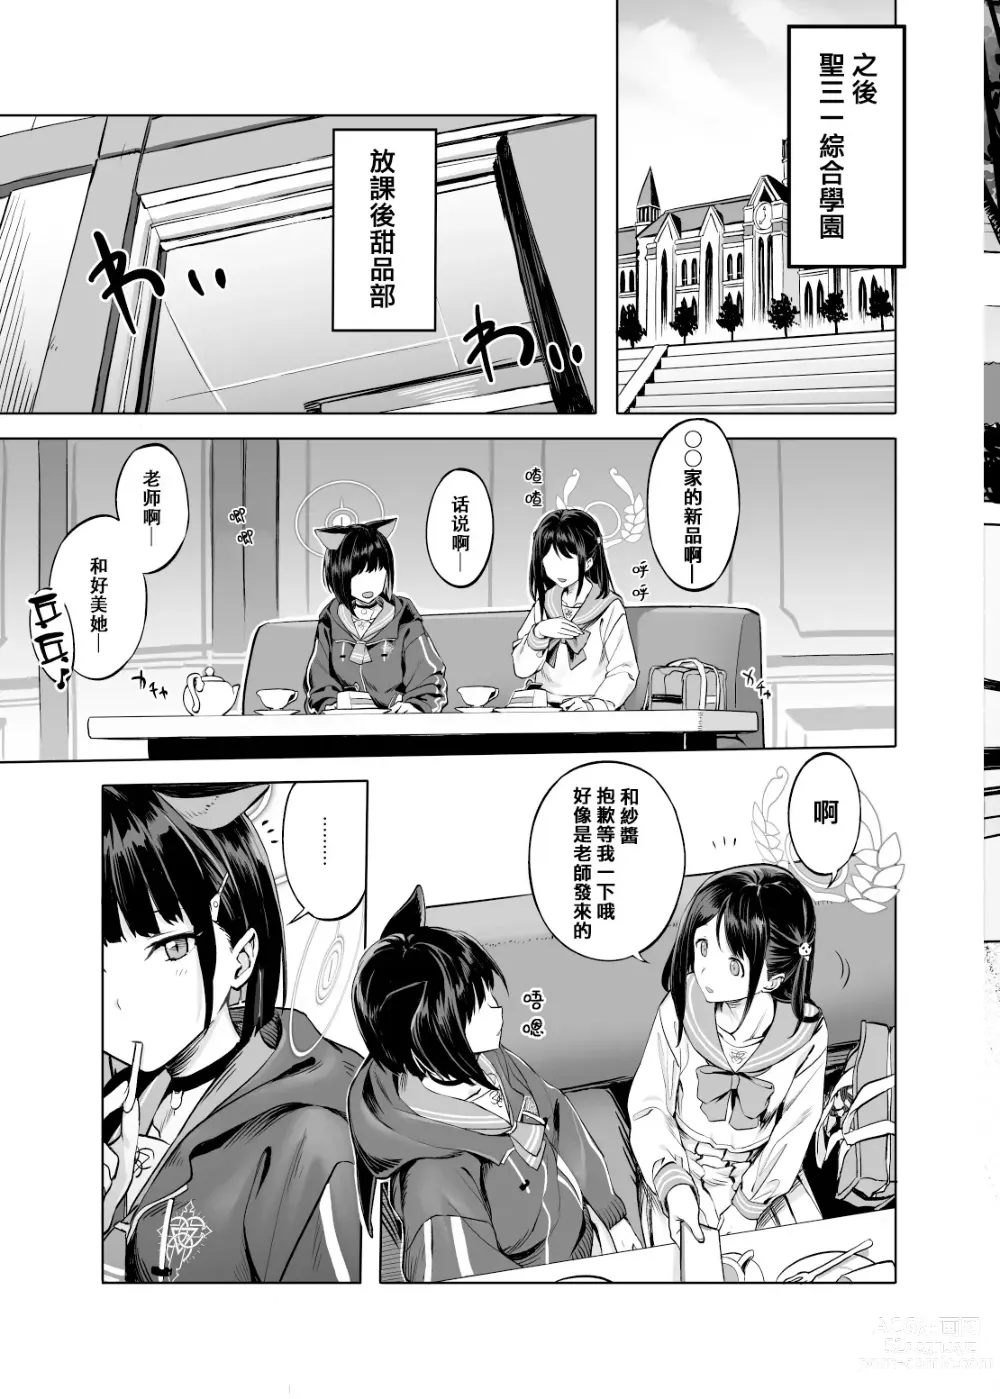 Page 9 of doujinshi Kyouyama Kazusa no Torisetsu - Tetourner le Chat dans la casserole